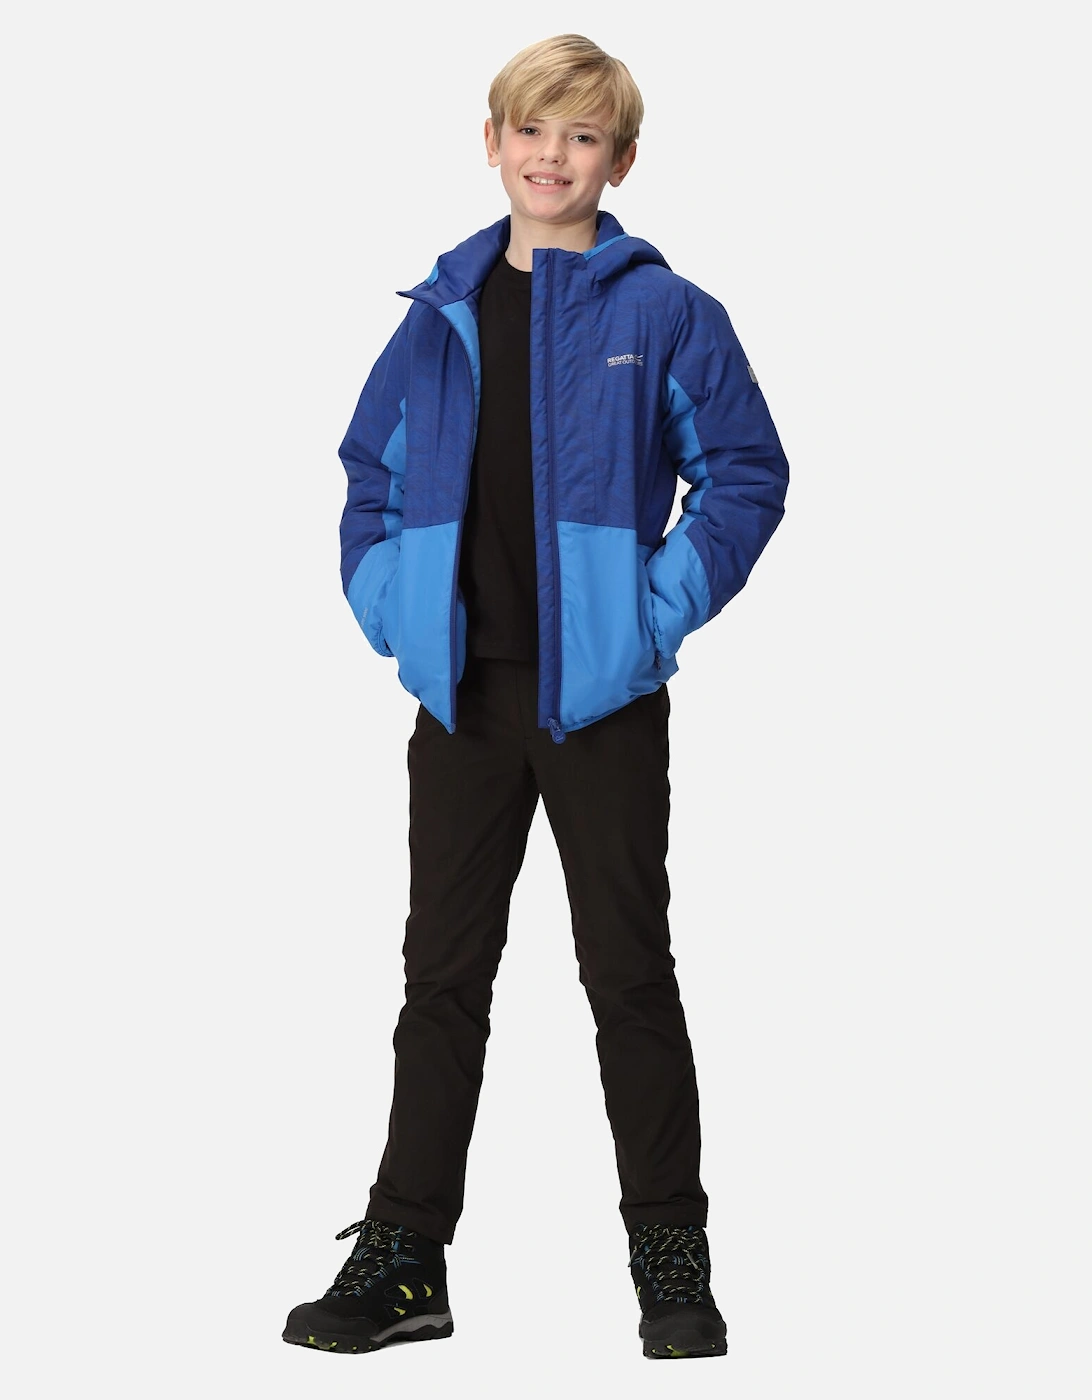 Childrens/Kids Volcanics VII Reflective Waterproof Jacket